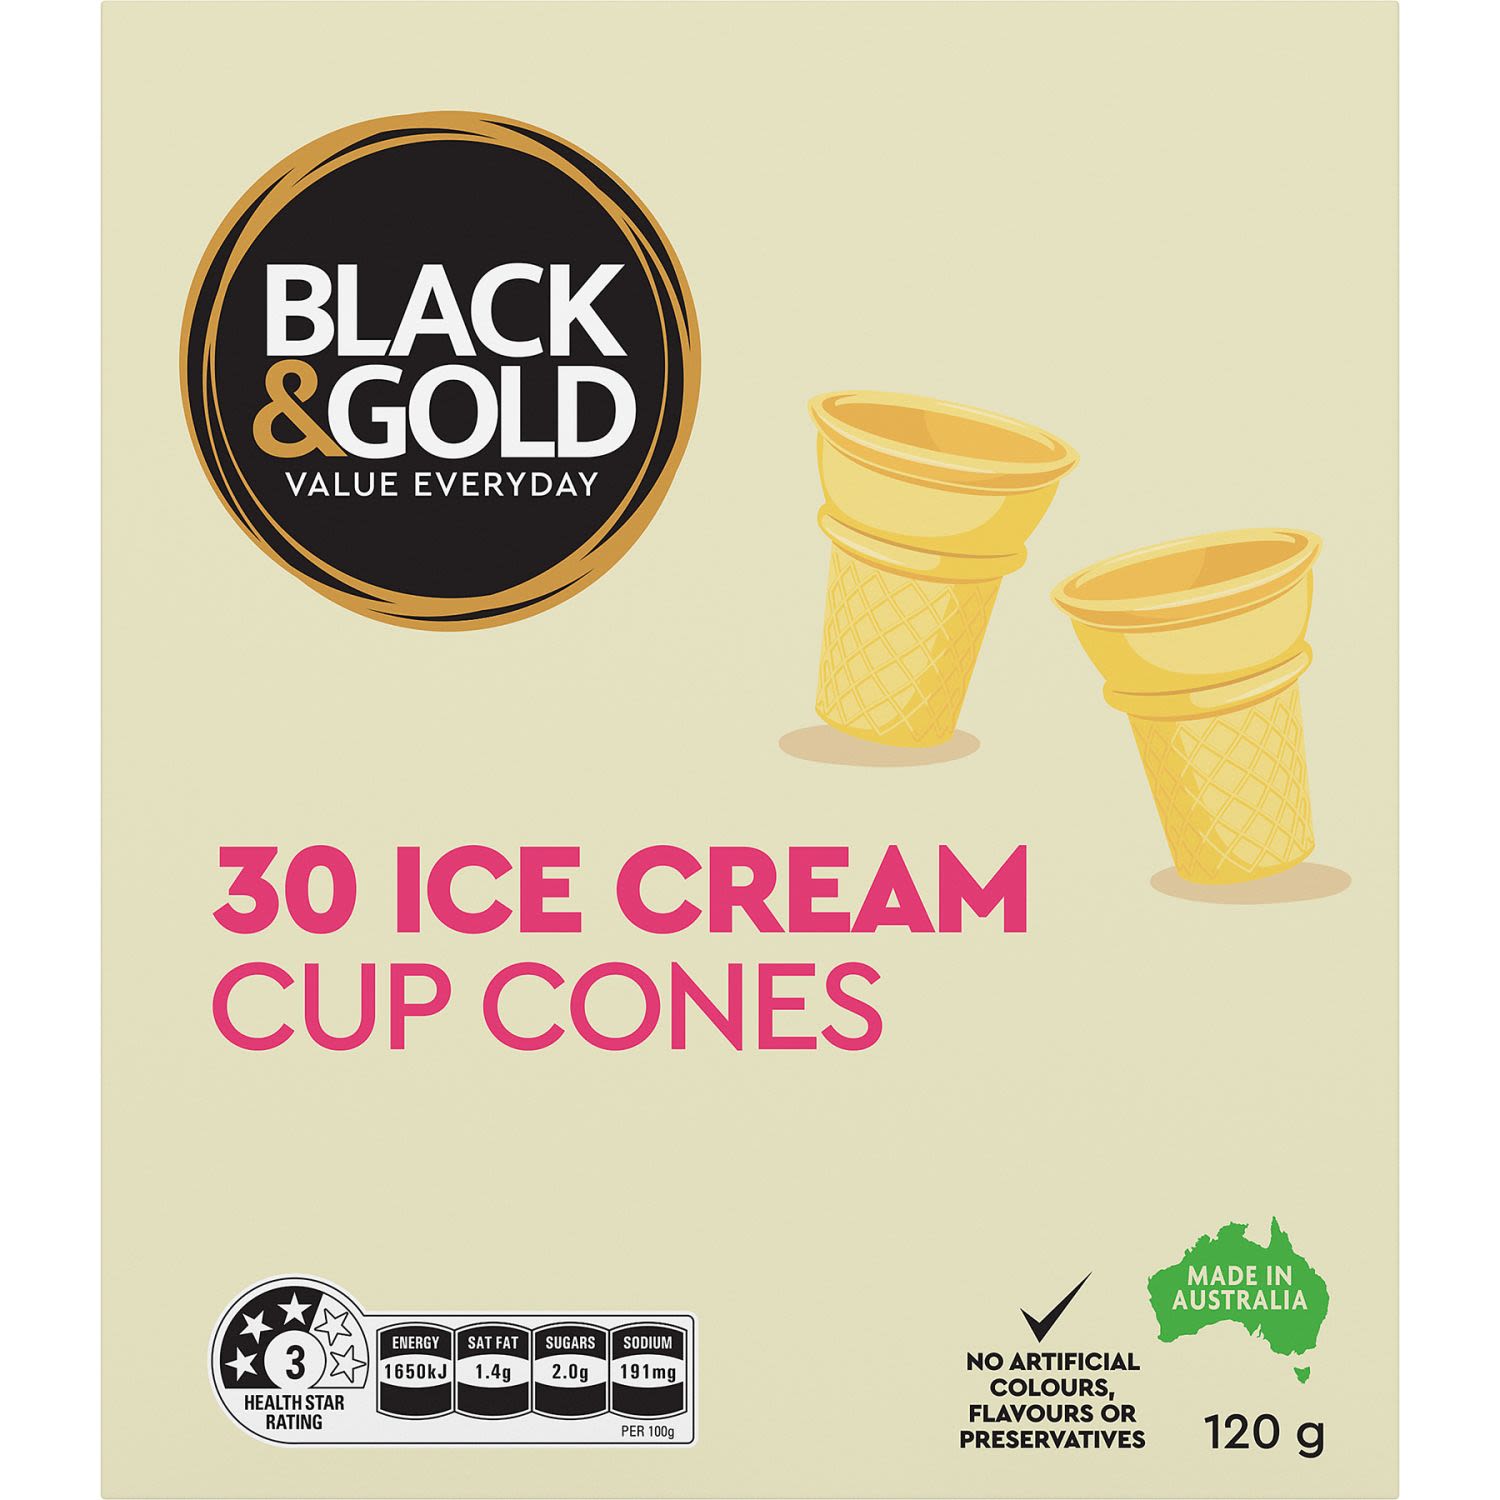 Black & Gold Ice Cream Cup Cones, 30 Each